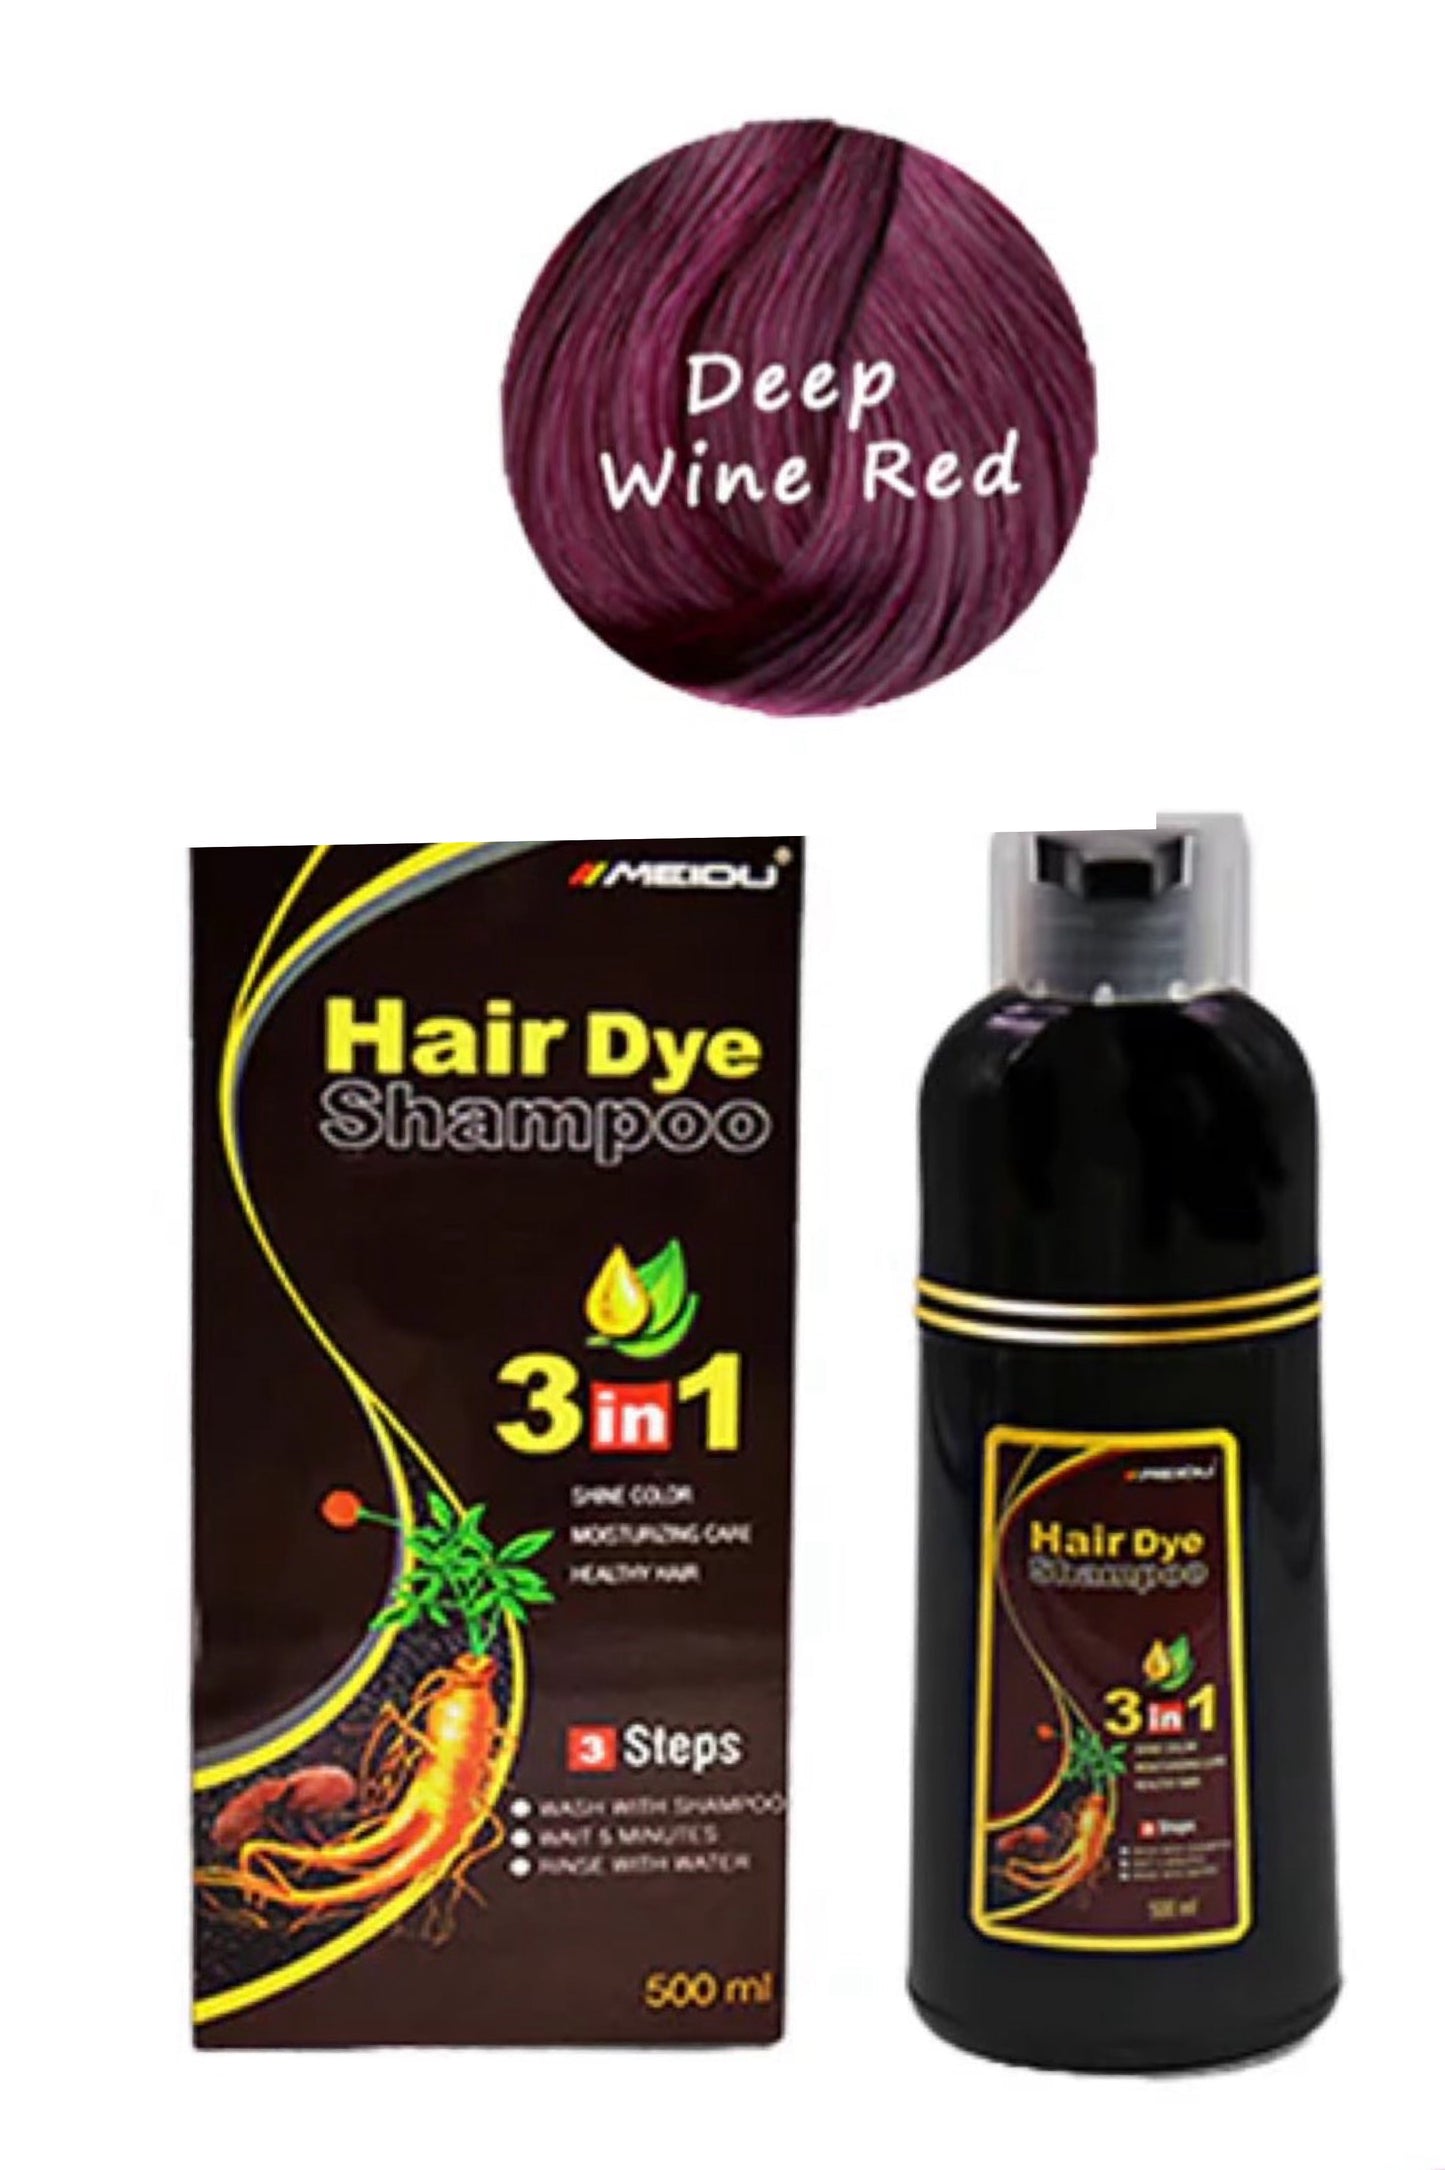 Shampoo Hair Dye Dark Wine Red